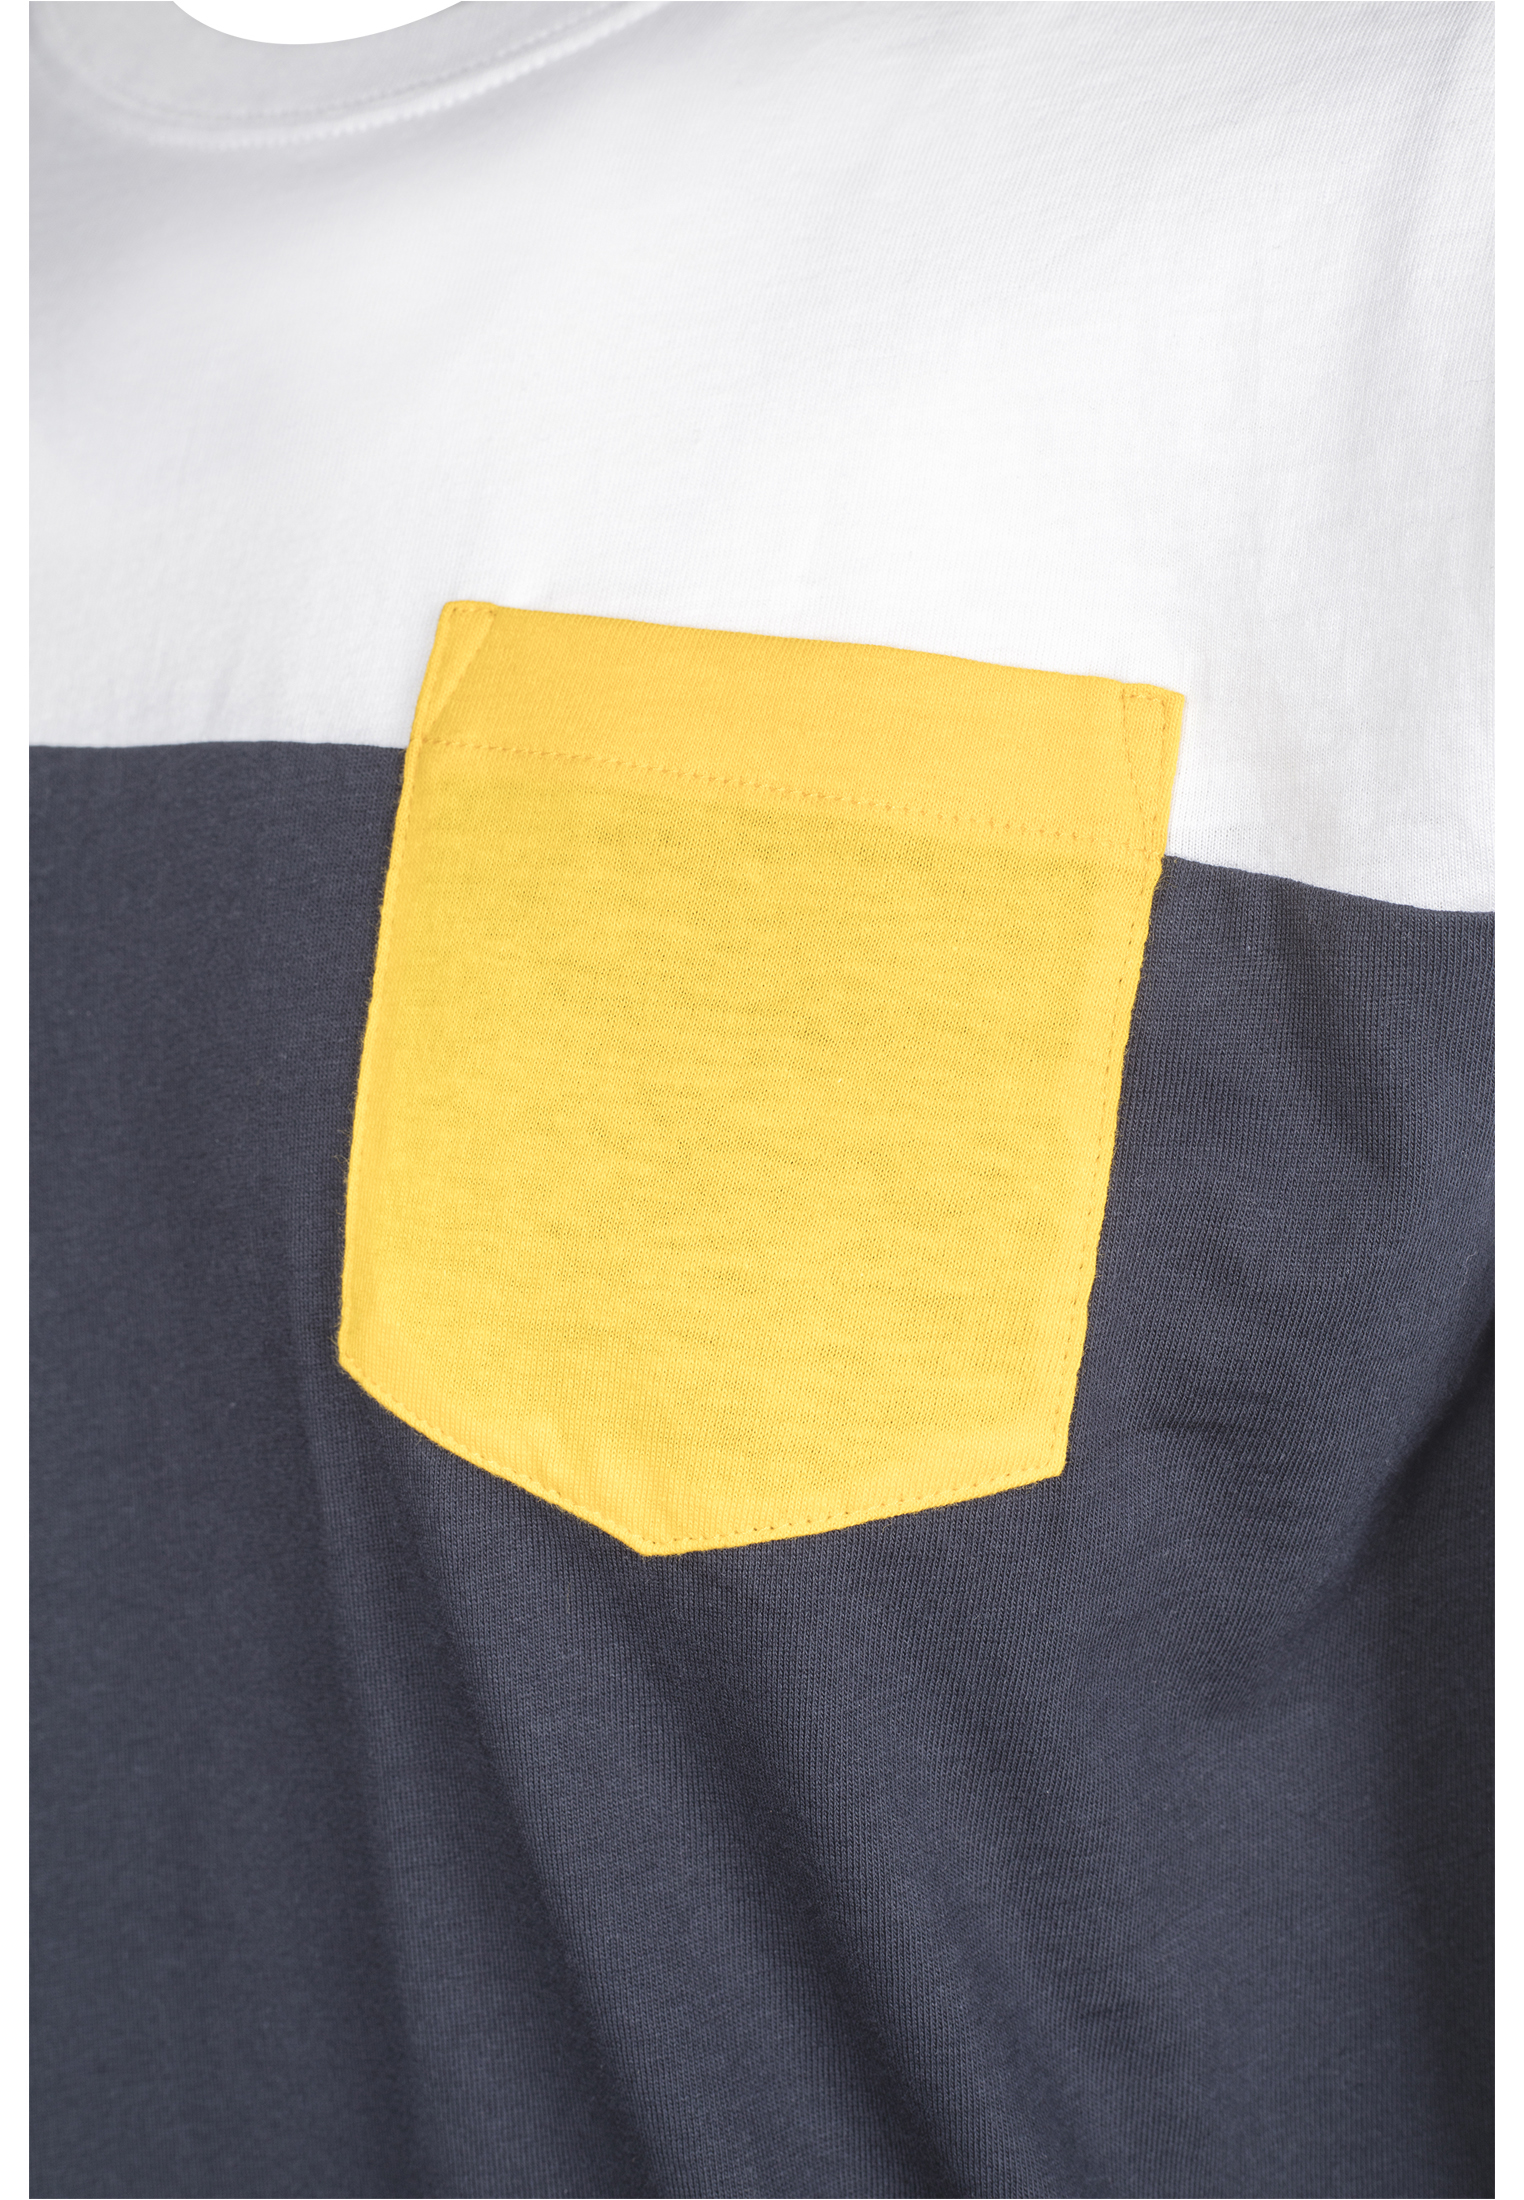 T-Shirts 3-Tone Pocket Tee in Farbe nvy/wht/chromeyellow